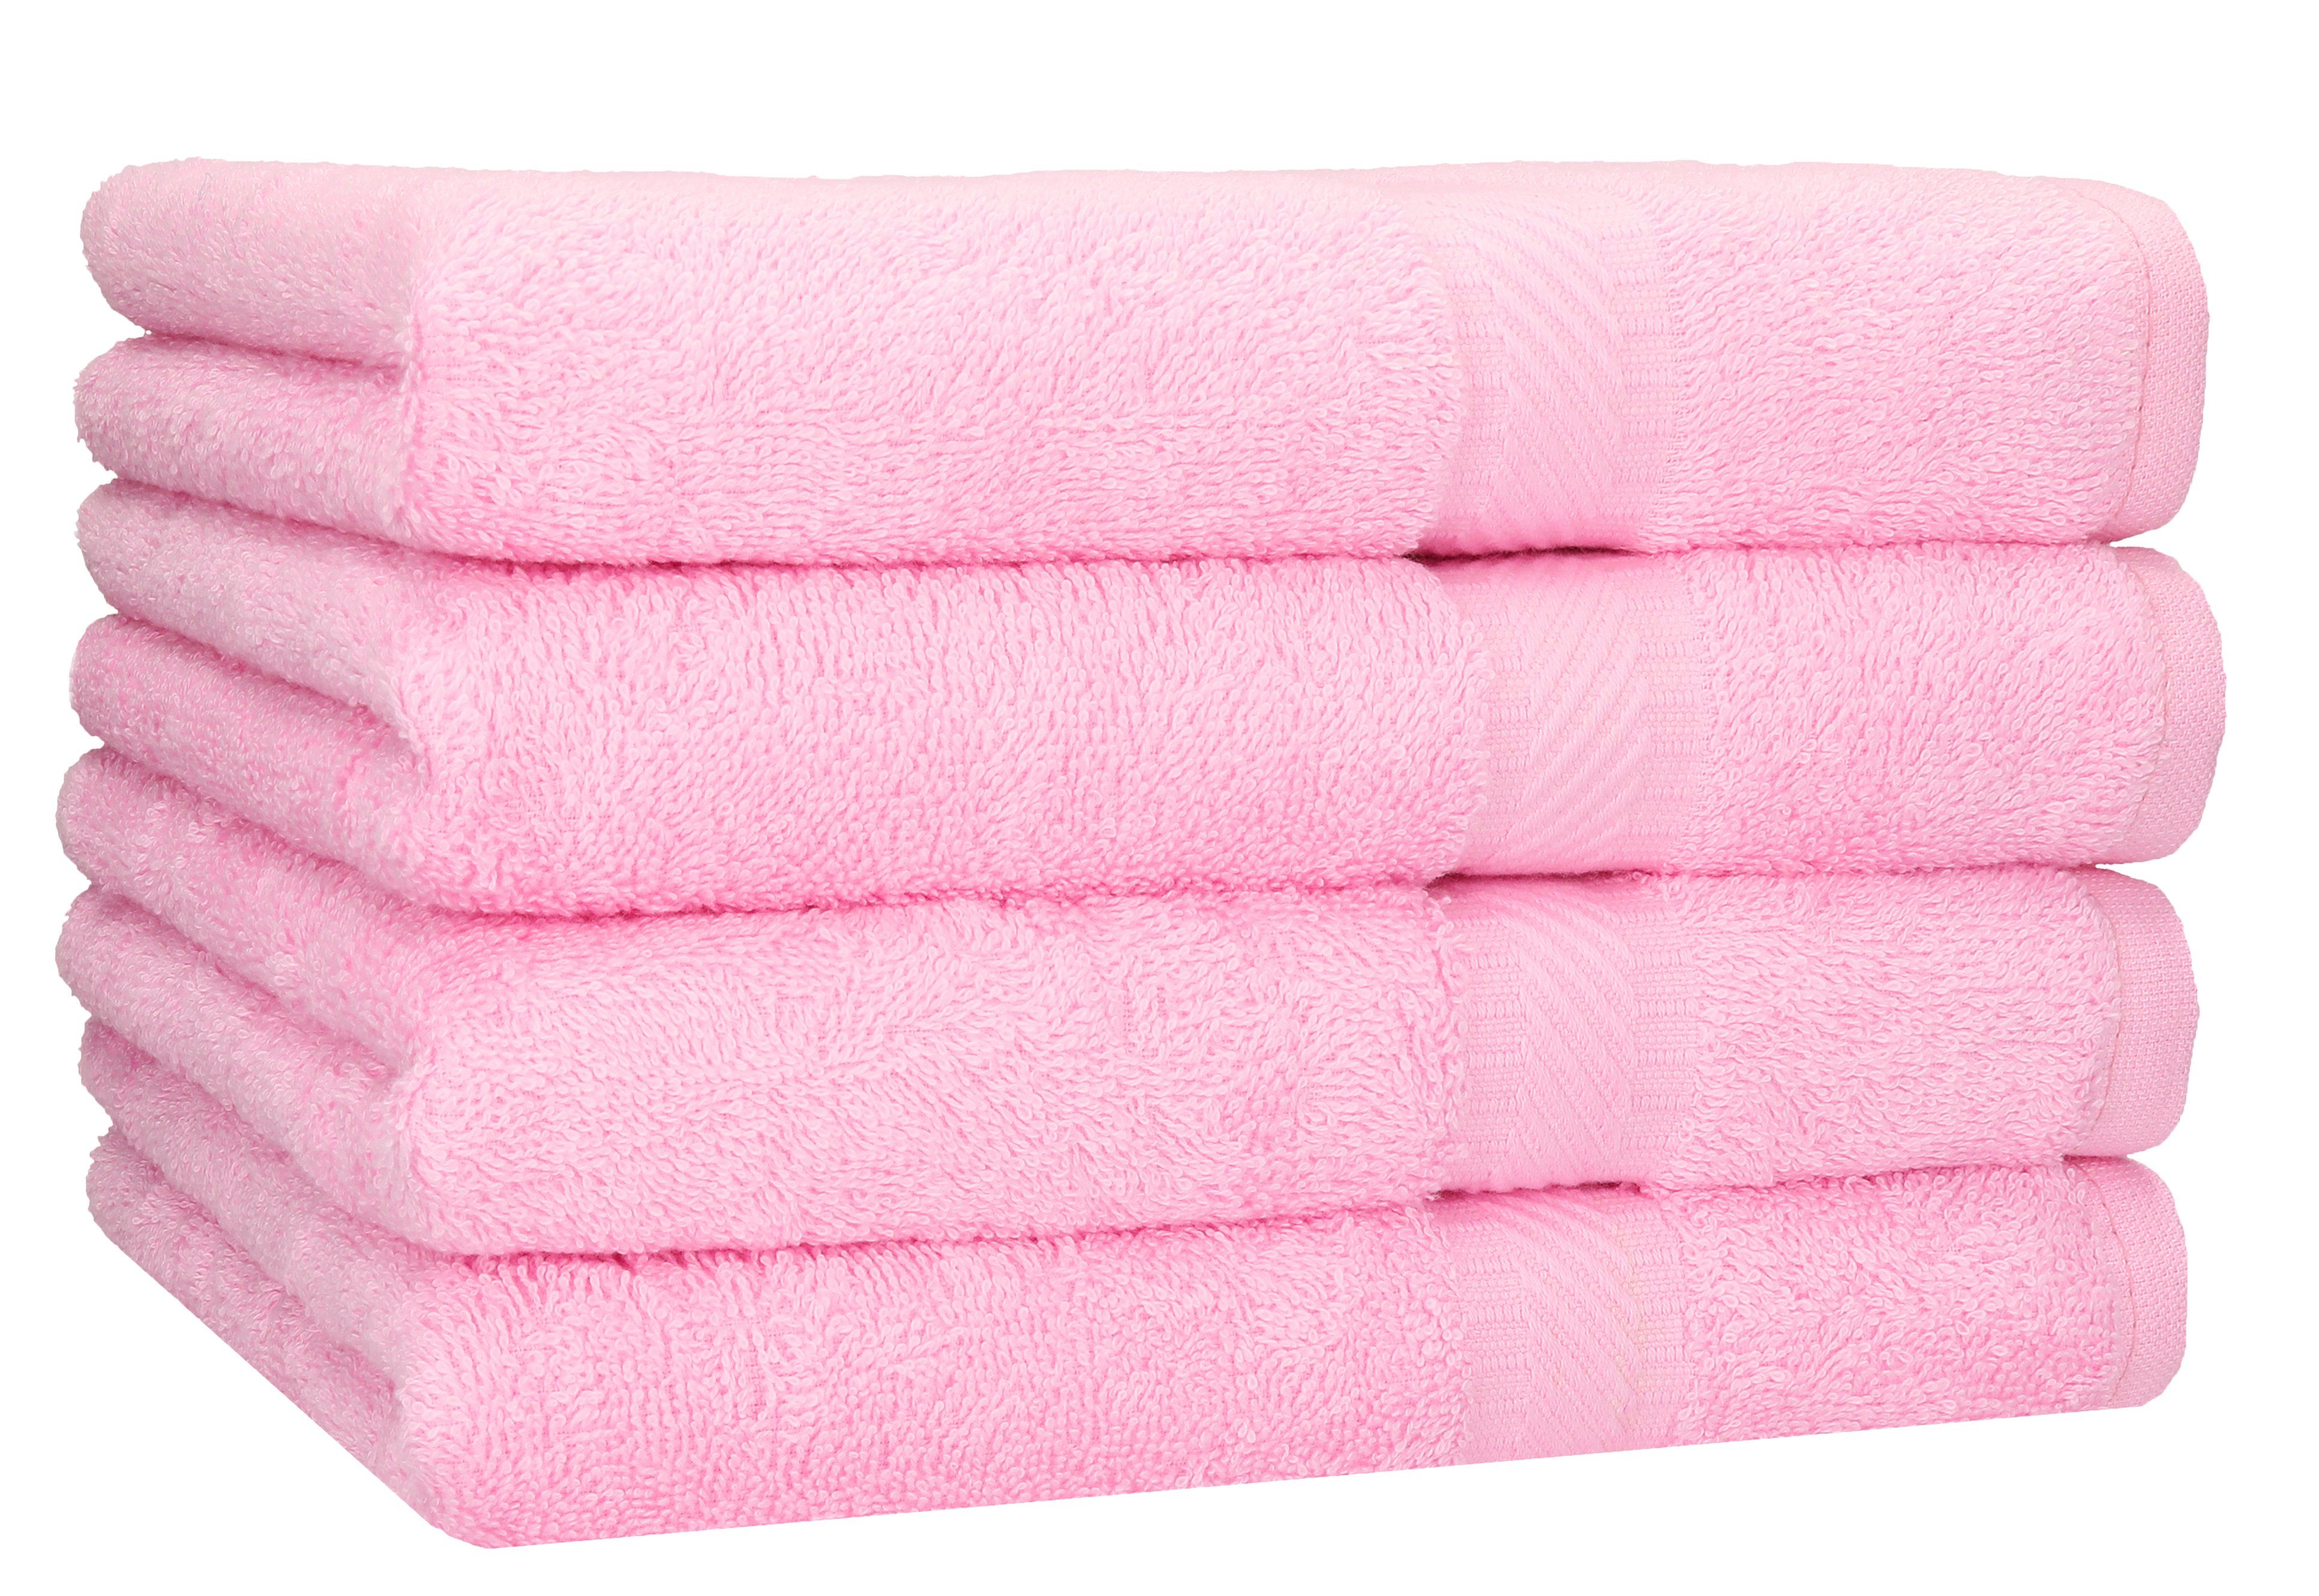 Betz Duschtücher 4 Stück Duschtücher Set Palermo Größe 70x140 cm 100% Baumwolle Badetuch Duschhandtuch Sporthandtuch, 100% Baumwolle rosé